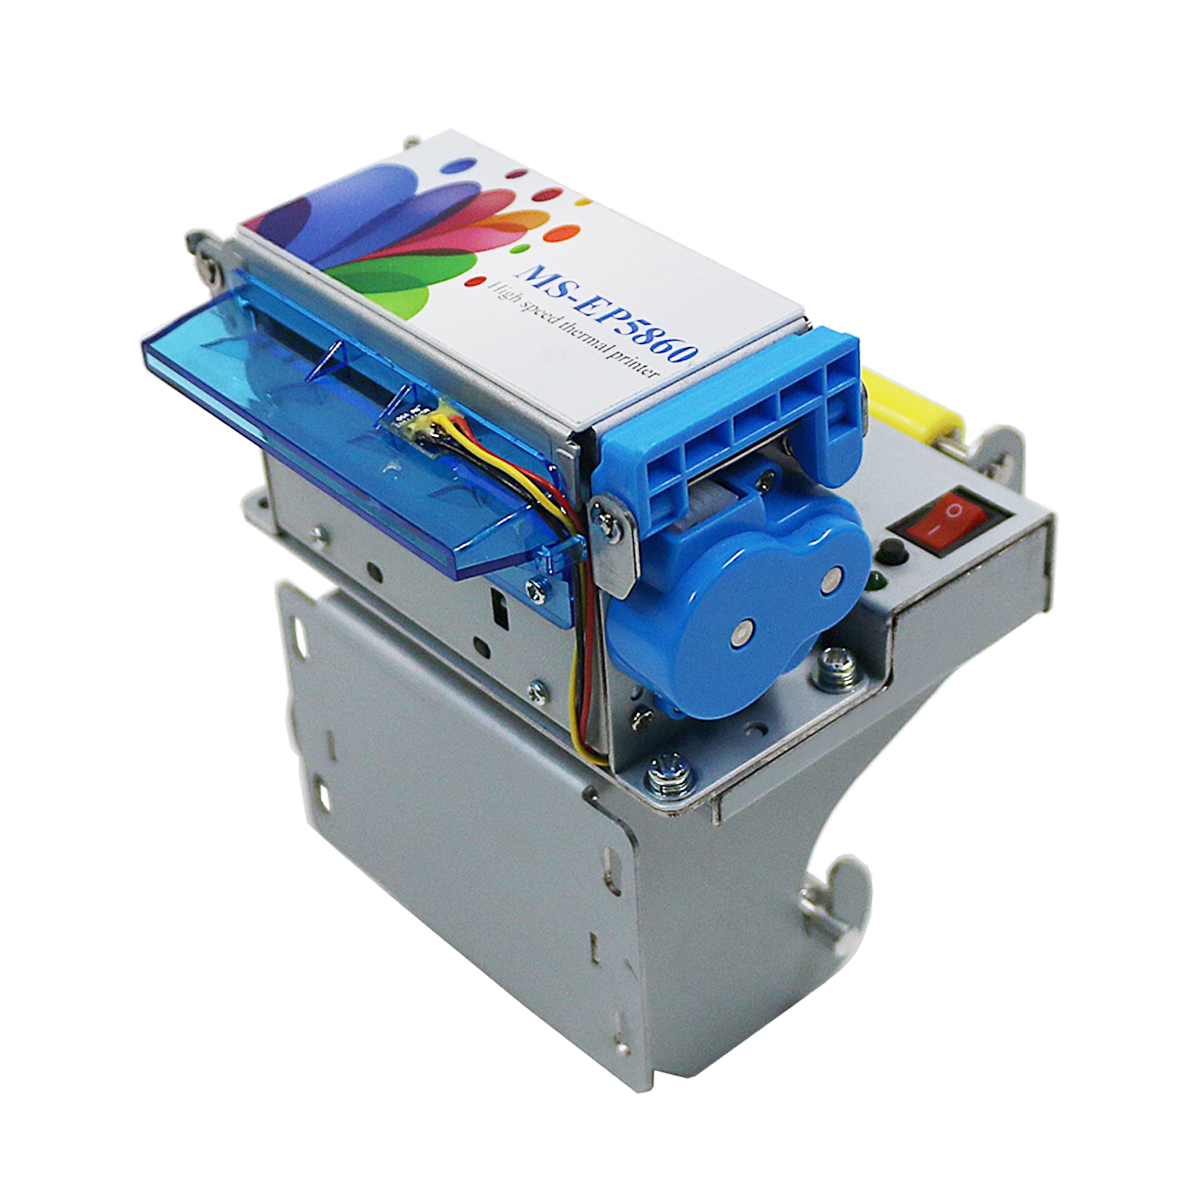 vending machine bluetooth 58mm Thermal Printer for mac